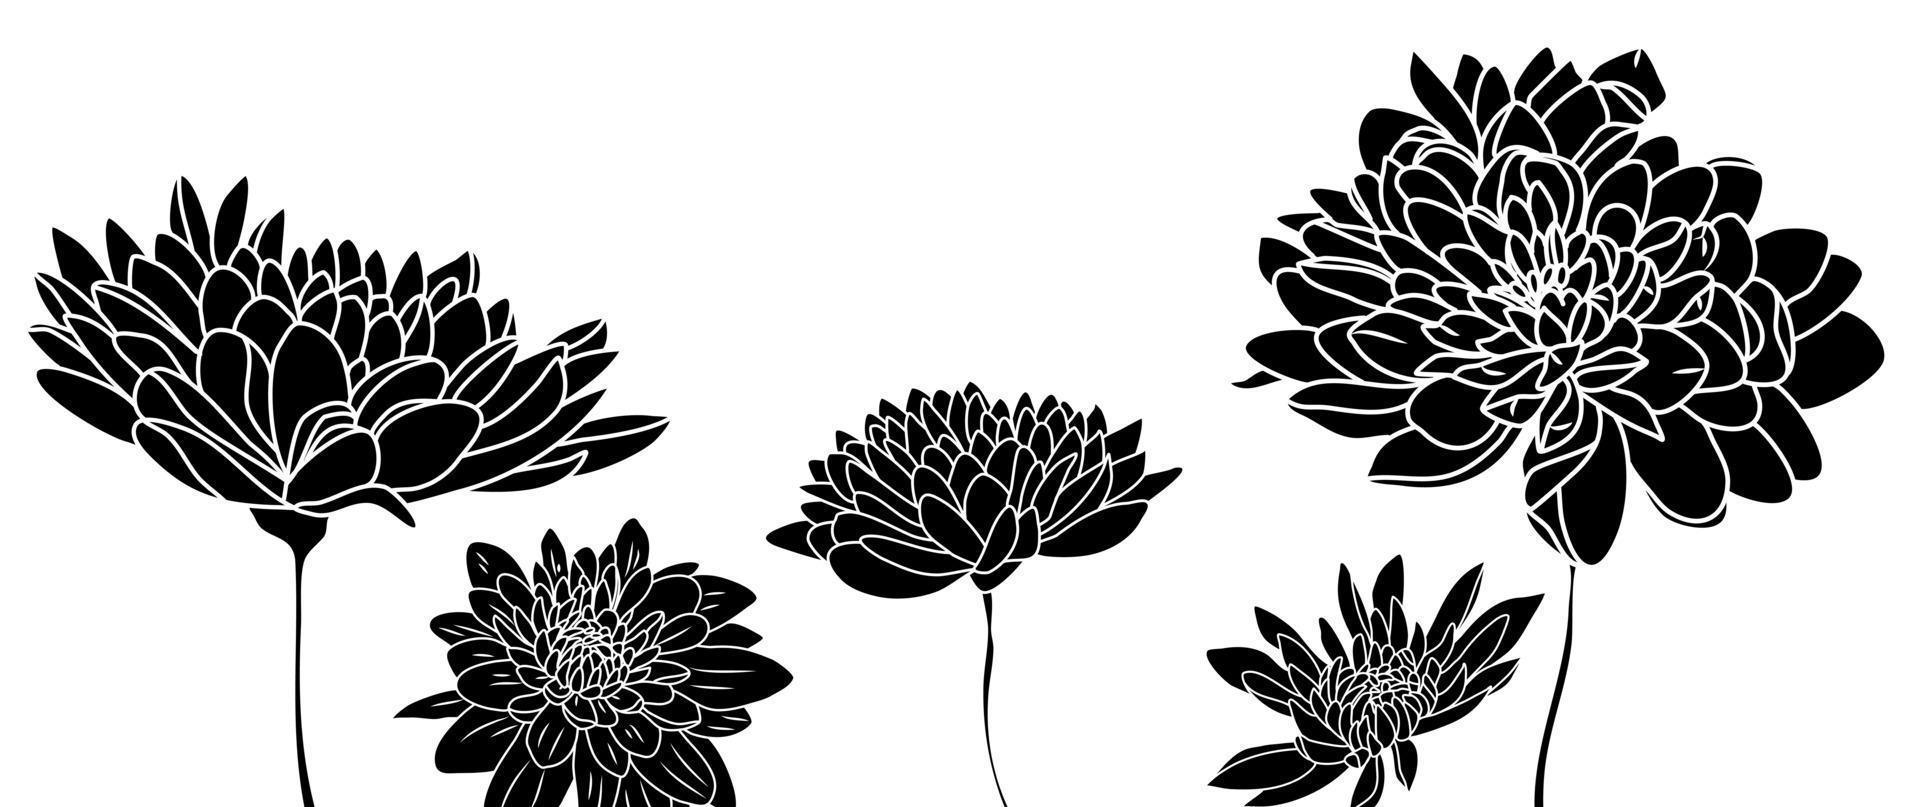 colección de flores antecedentes con crisantemos vector crisantemo flores antecedentes con negro gráfico colores